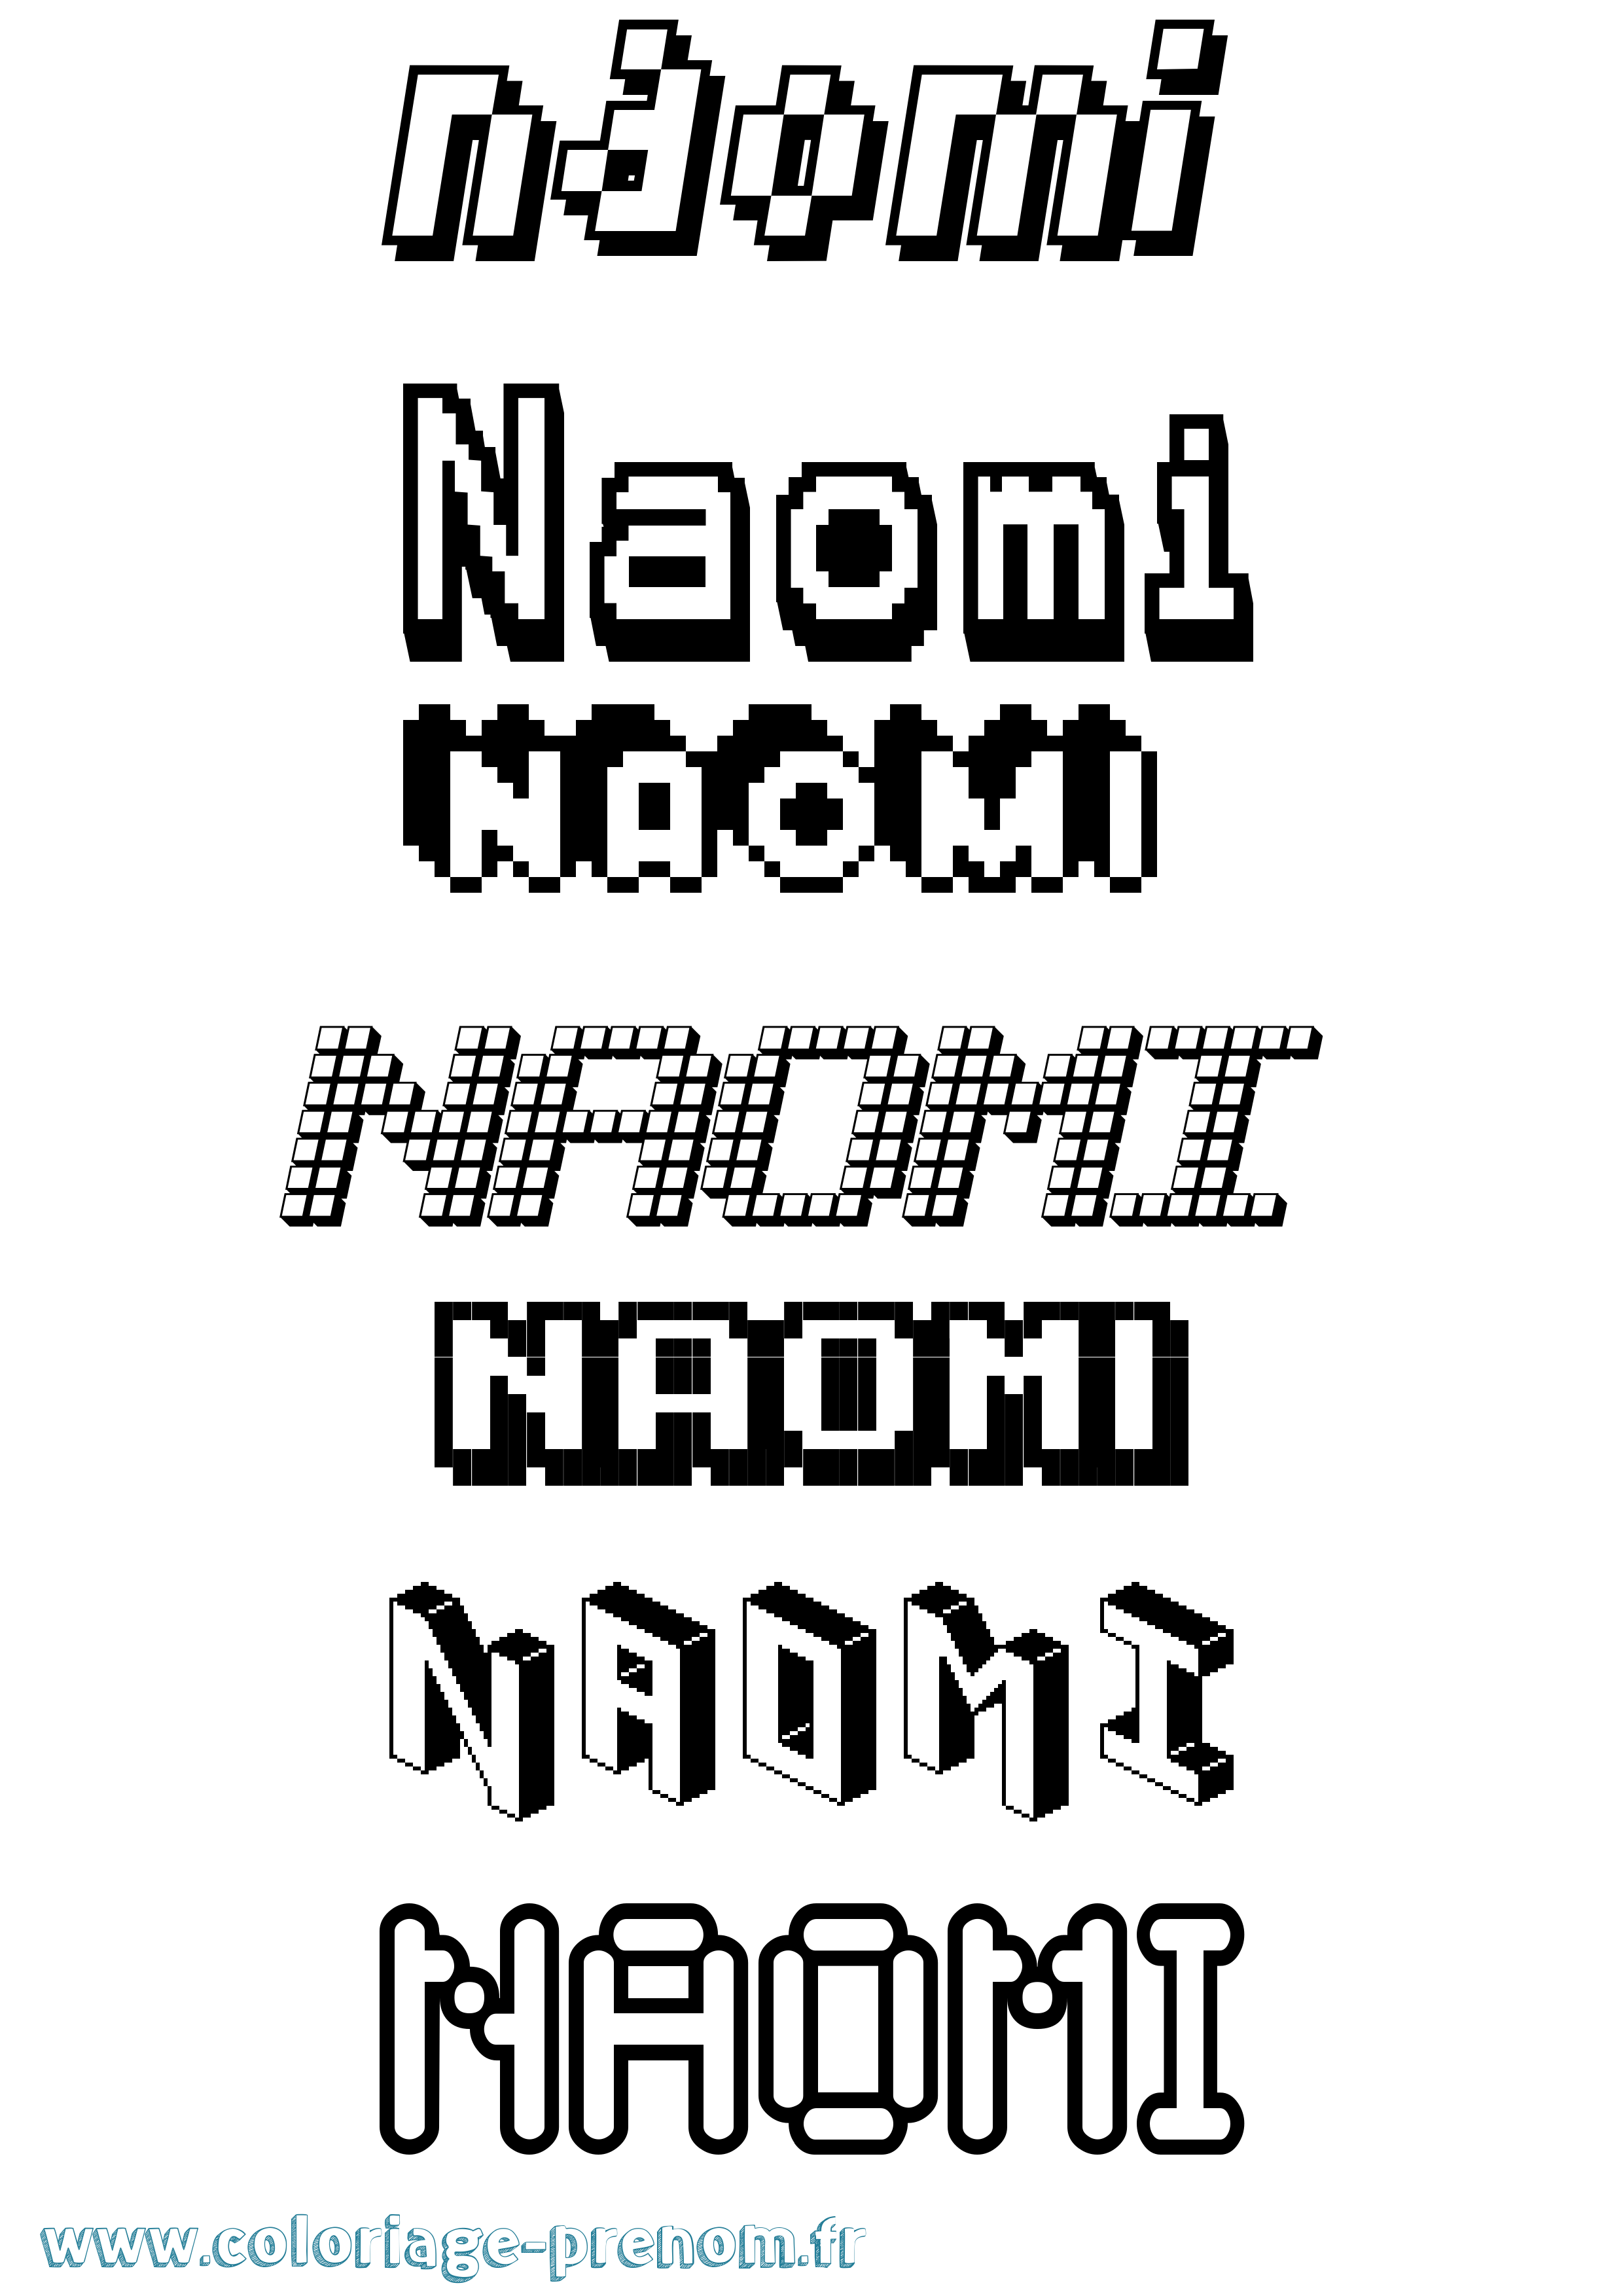 Coloriage prénom Naomi